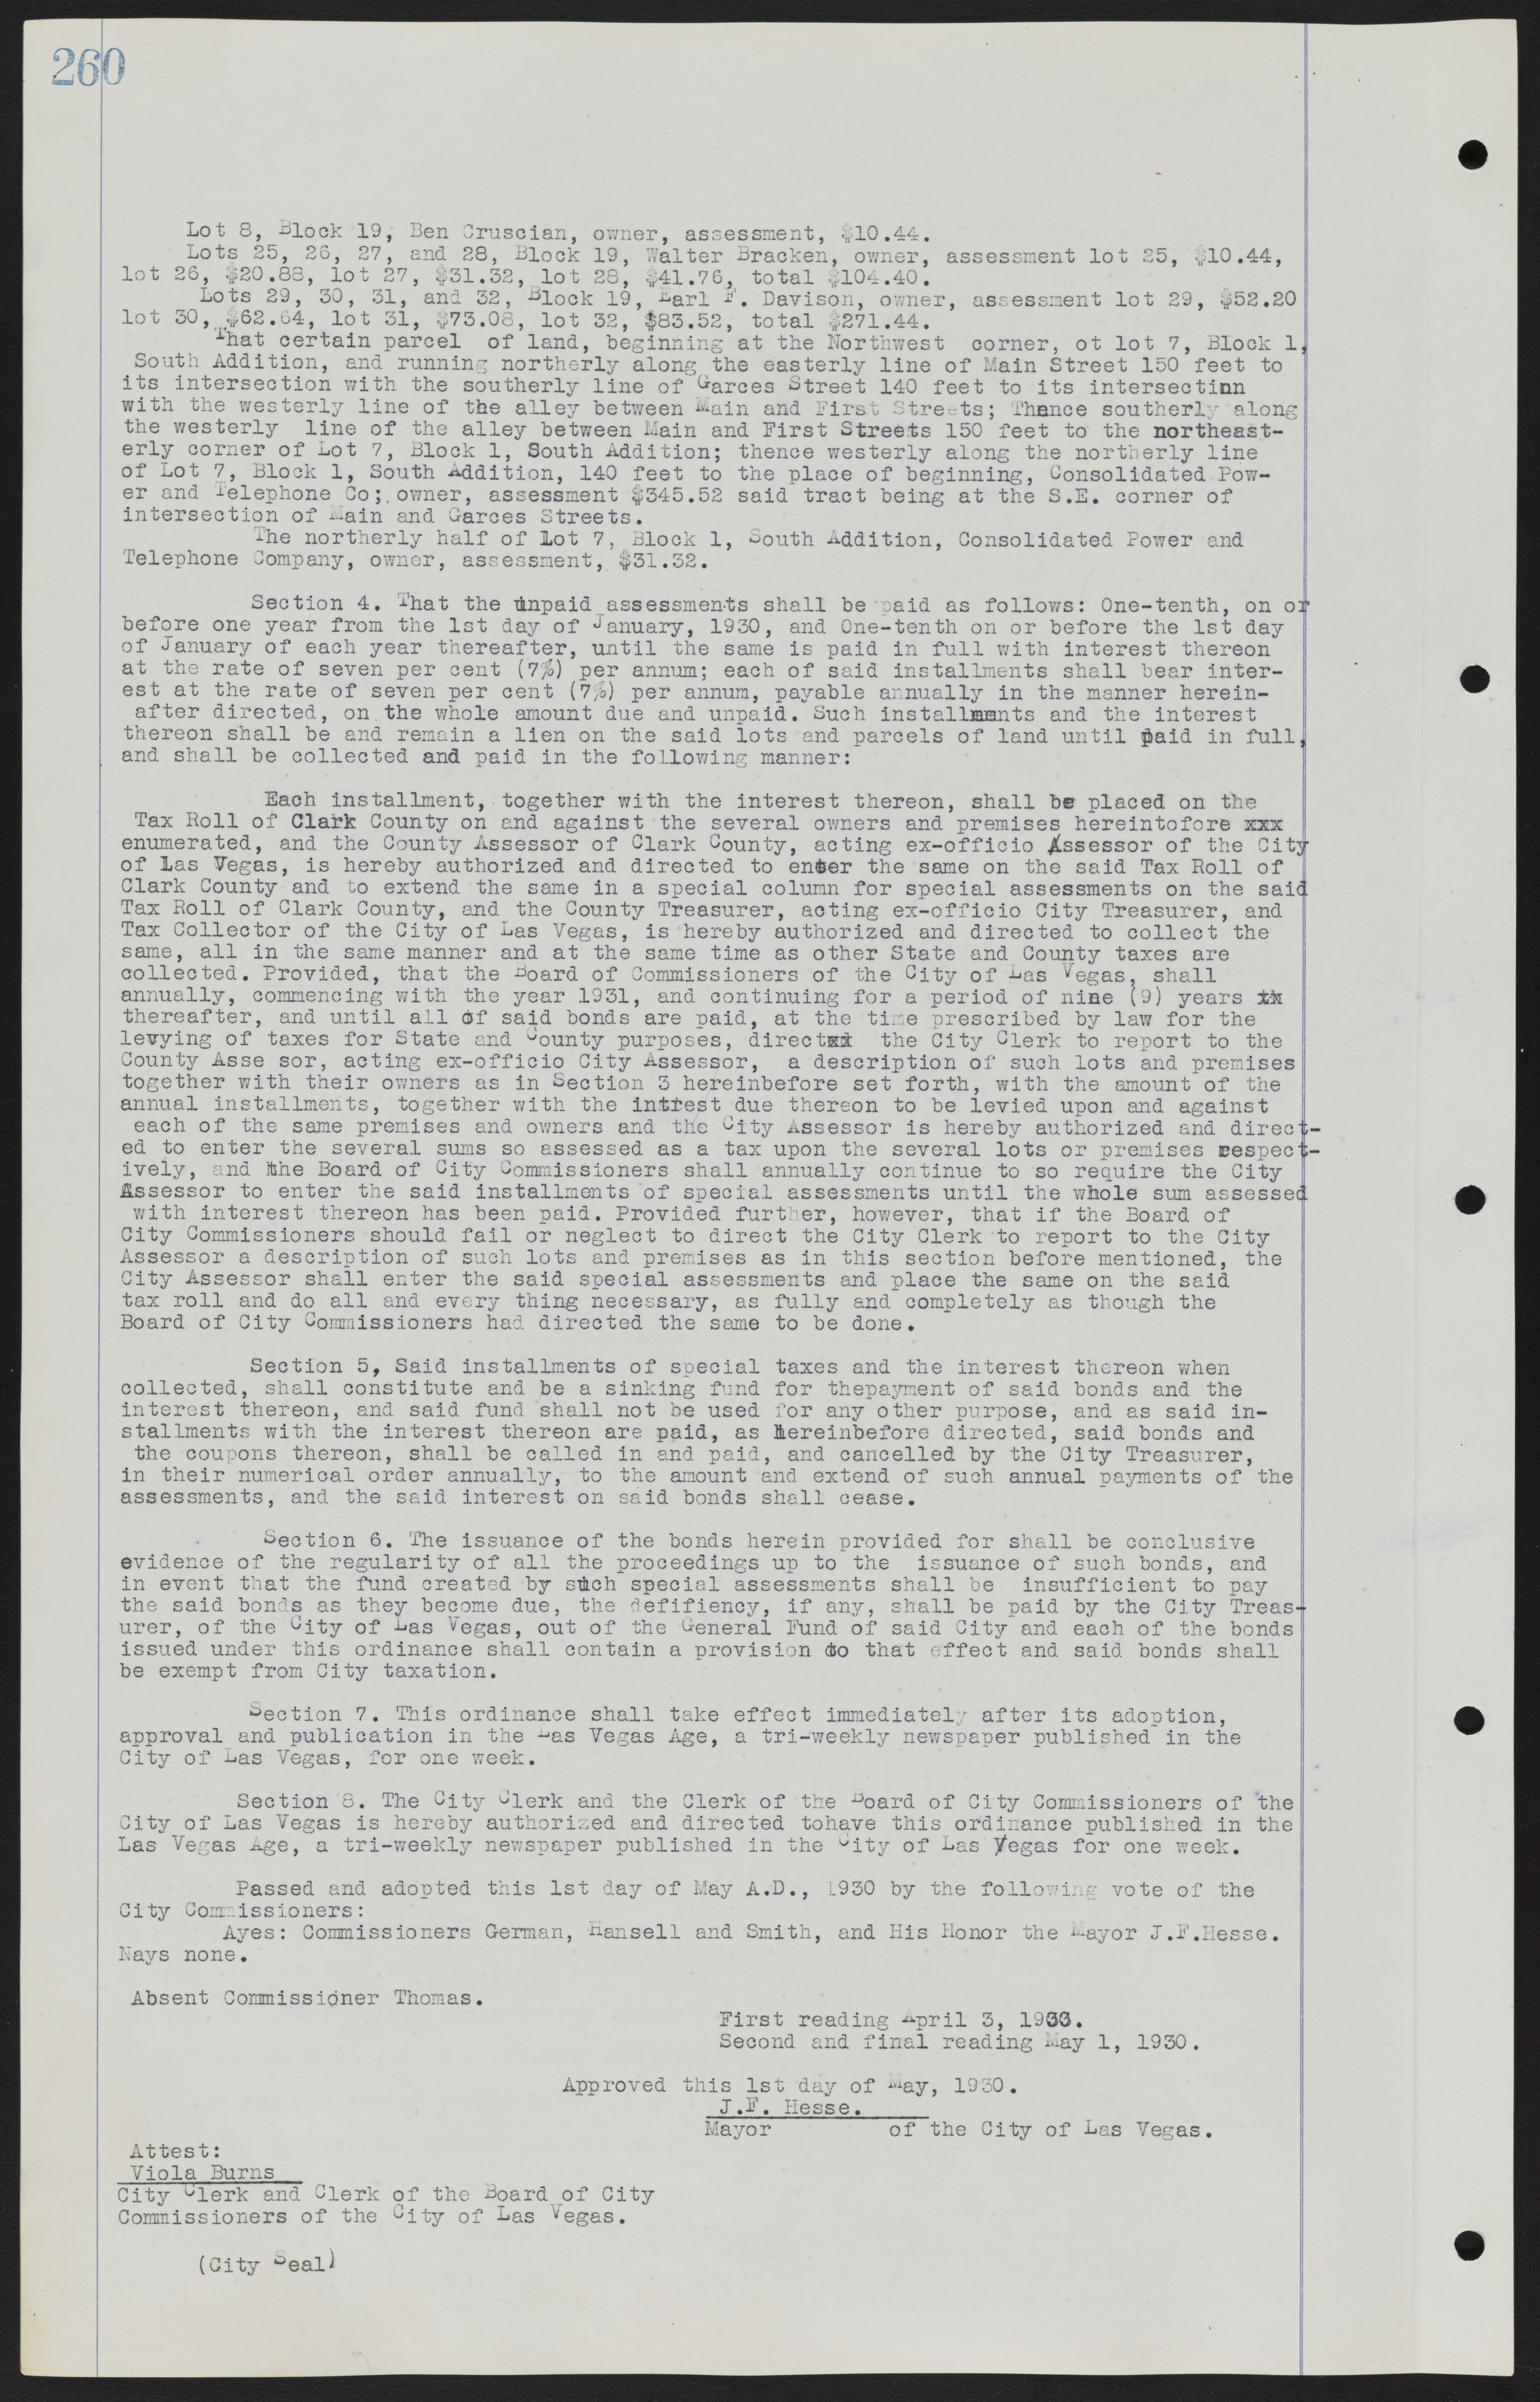 Las Vegas City Ordinances, July 18, 1911 to March 31, 1933, lvc000013-264